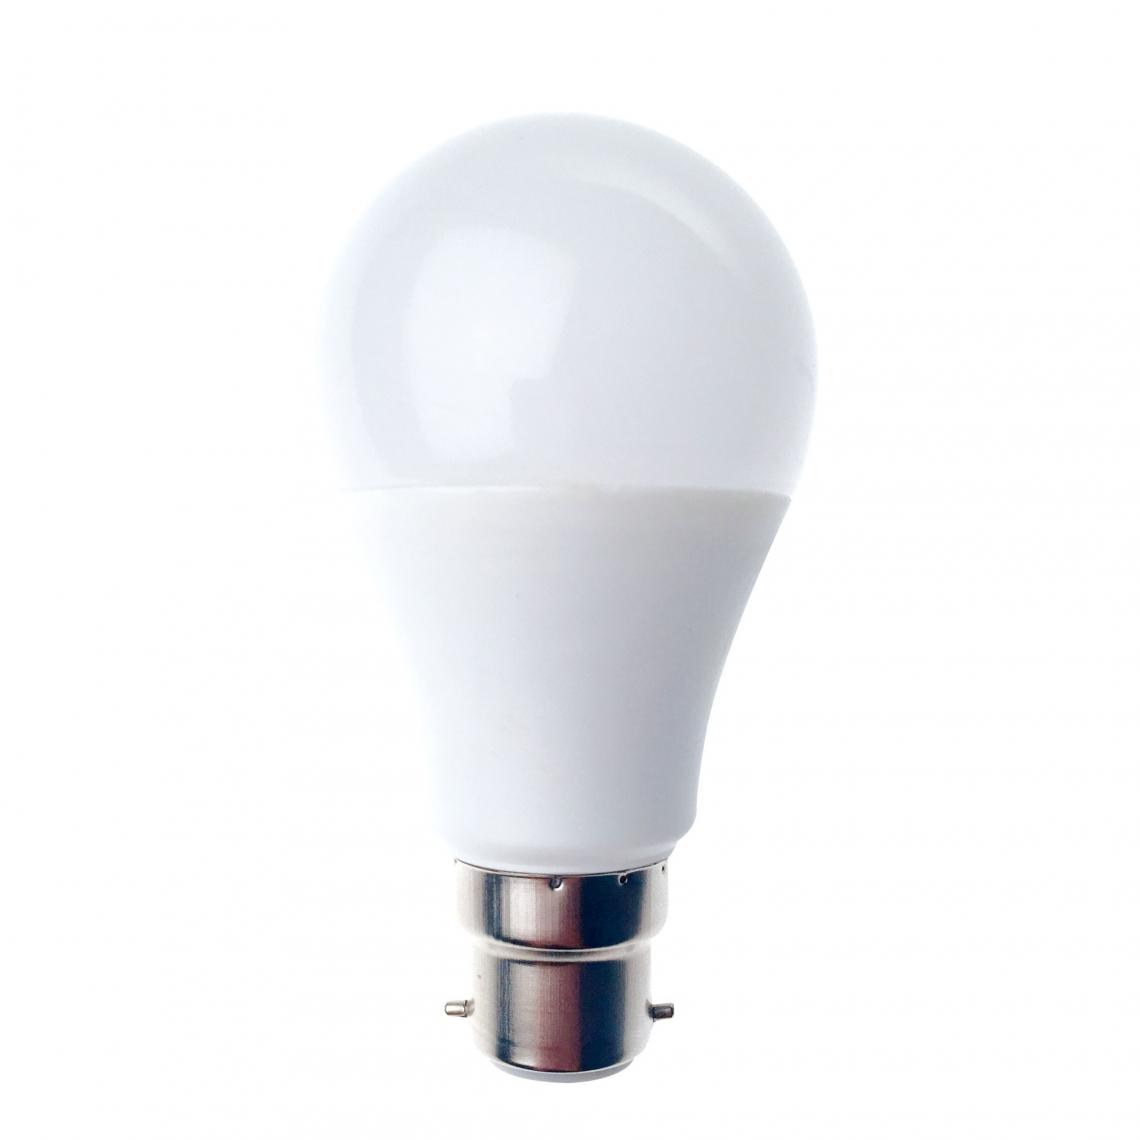 Velamp - Ampoule LED SMD, spot GU10, 230V, 8W / 800lm, 3000K, 38 ° - Ampoules LED